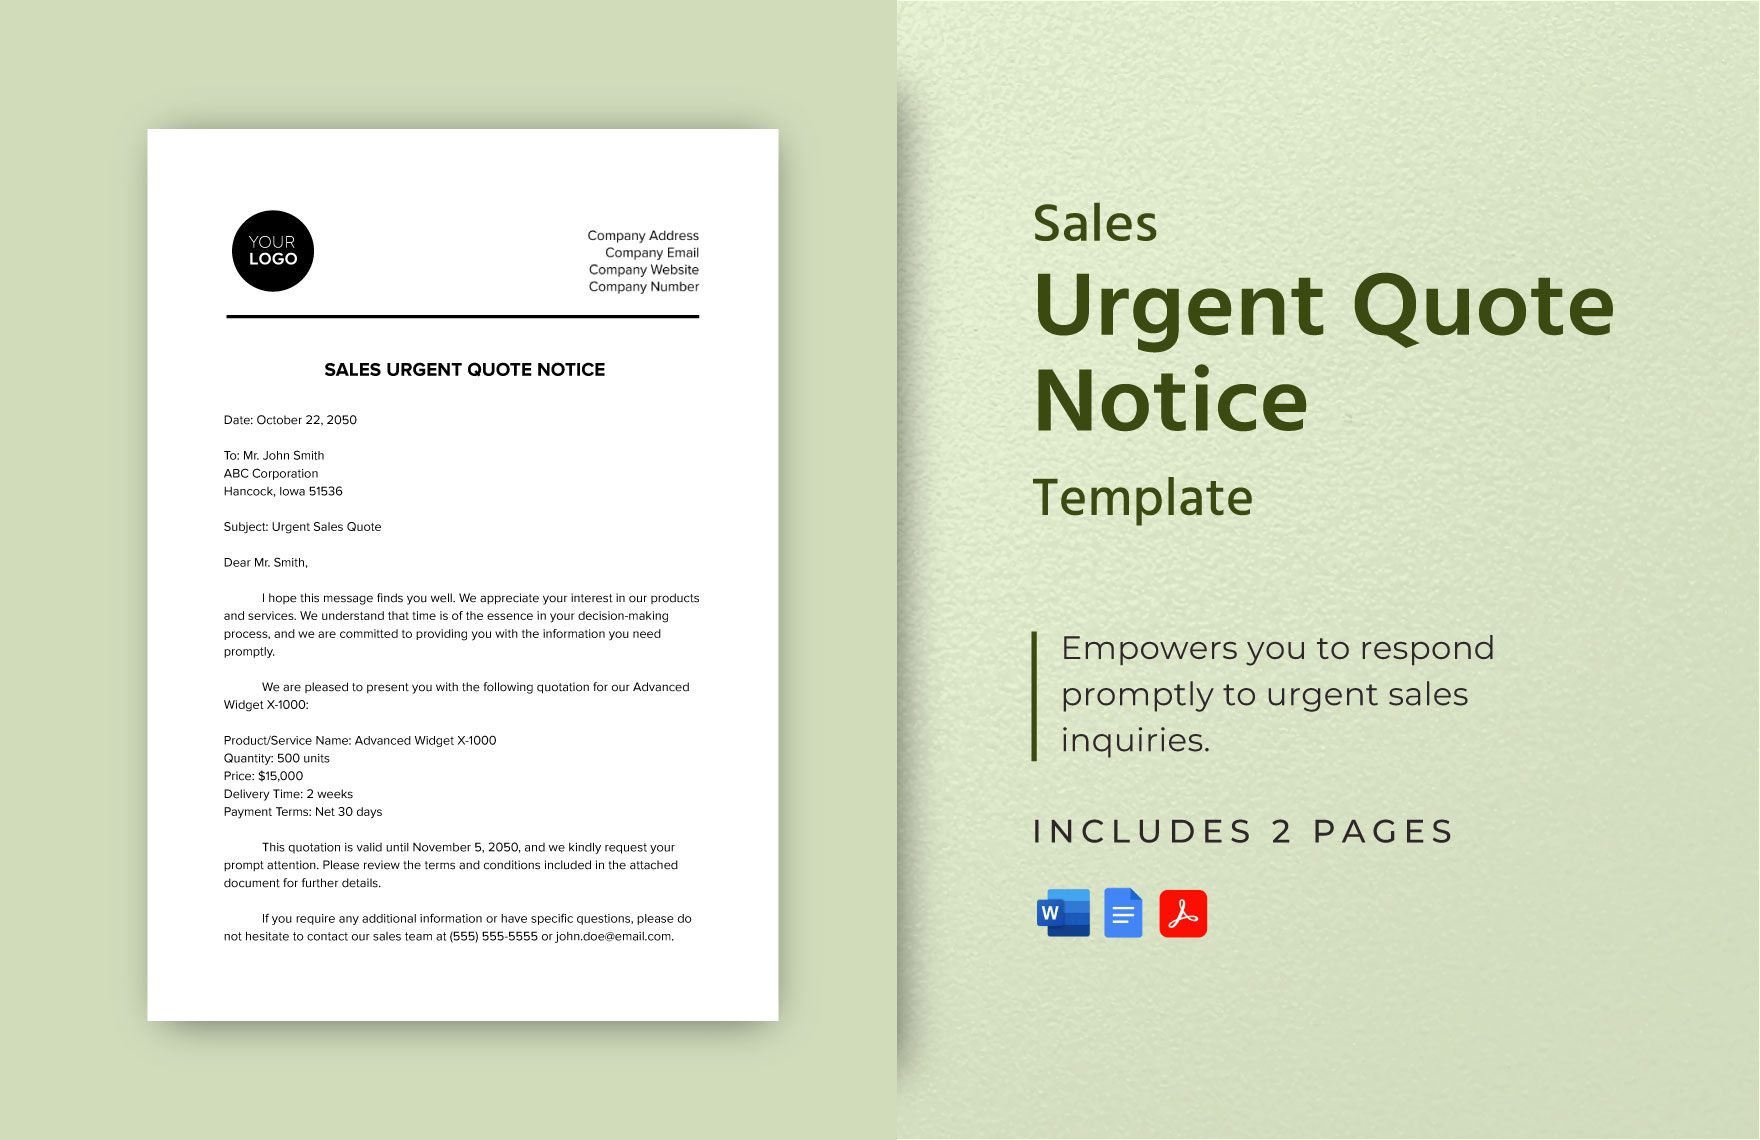 Sales Urgent Quote Notice Template in Word, Google Docs, PDF